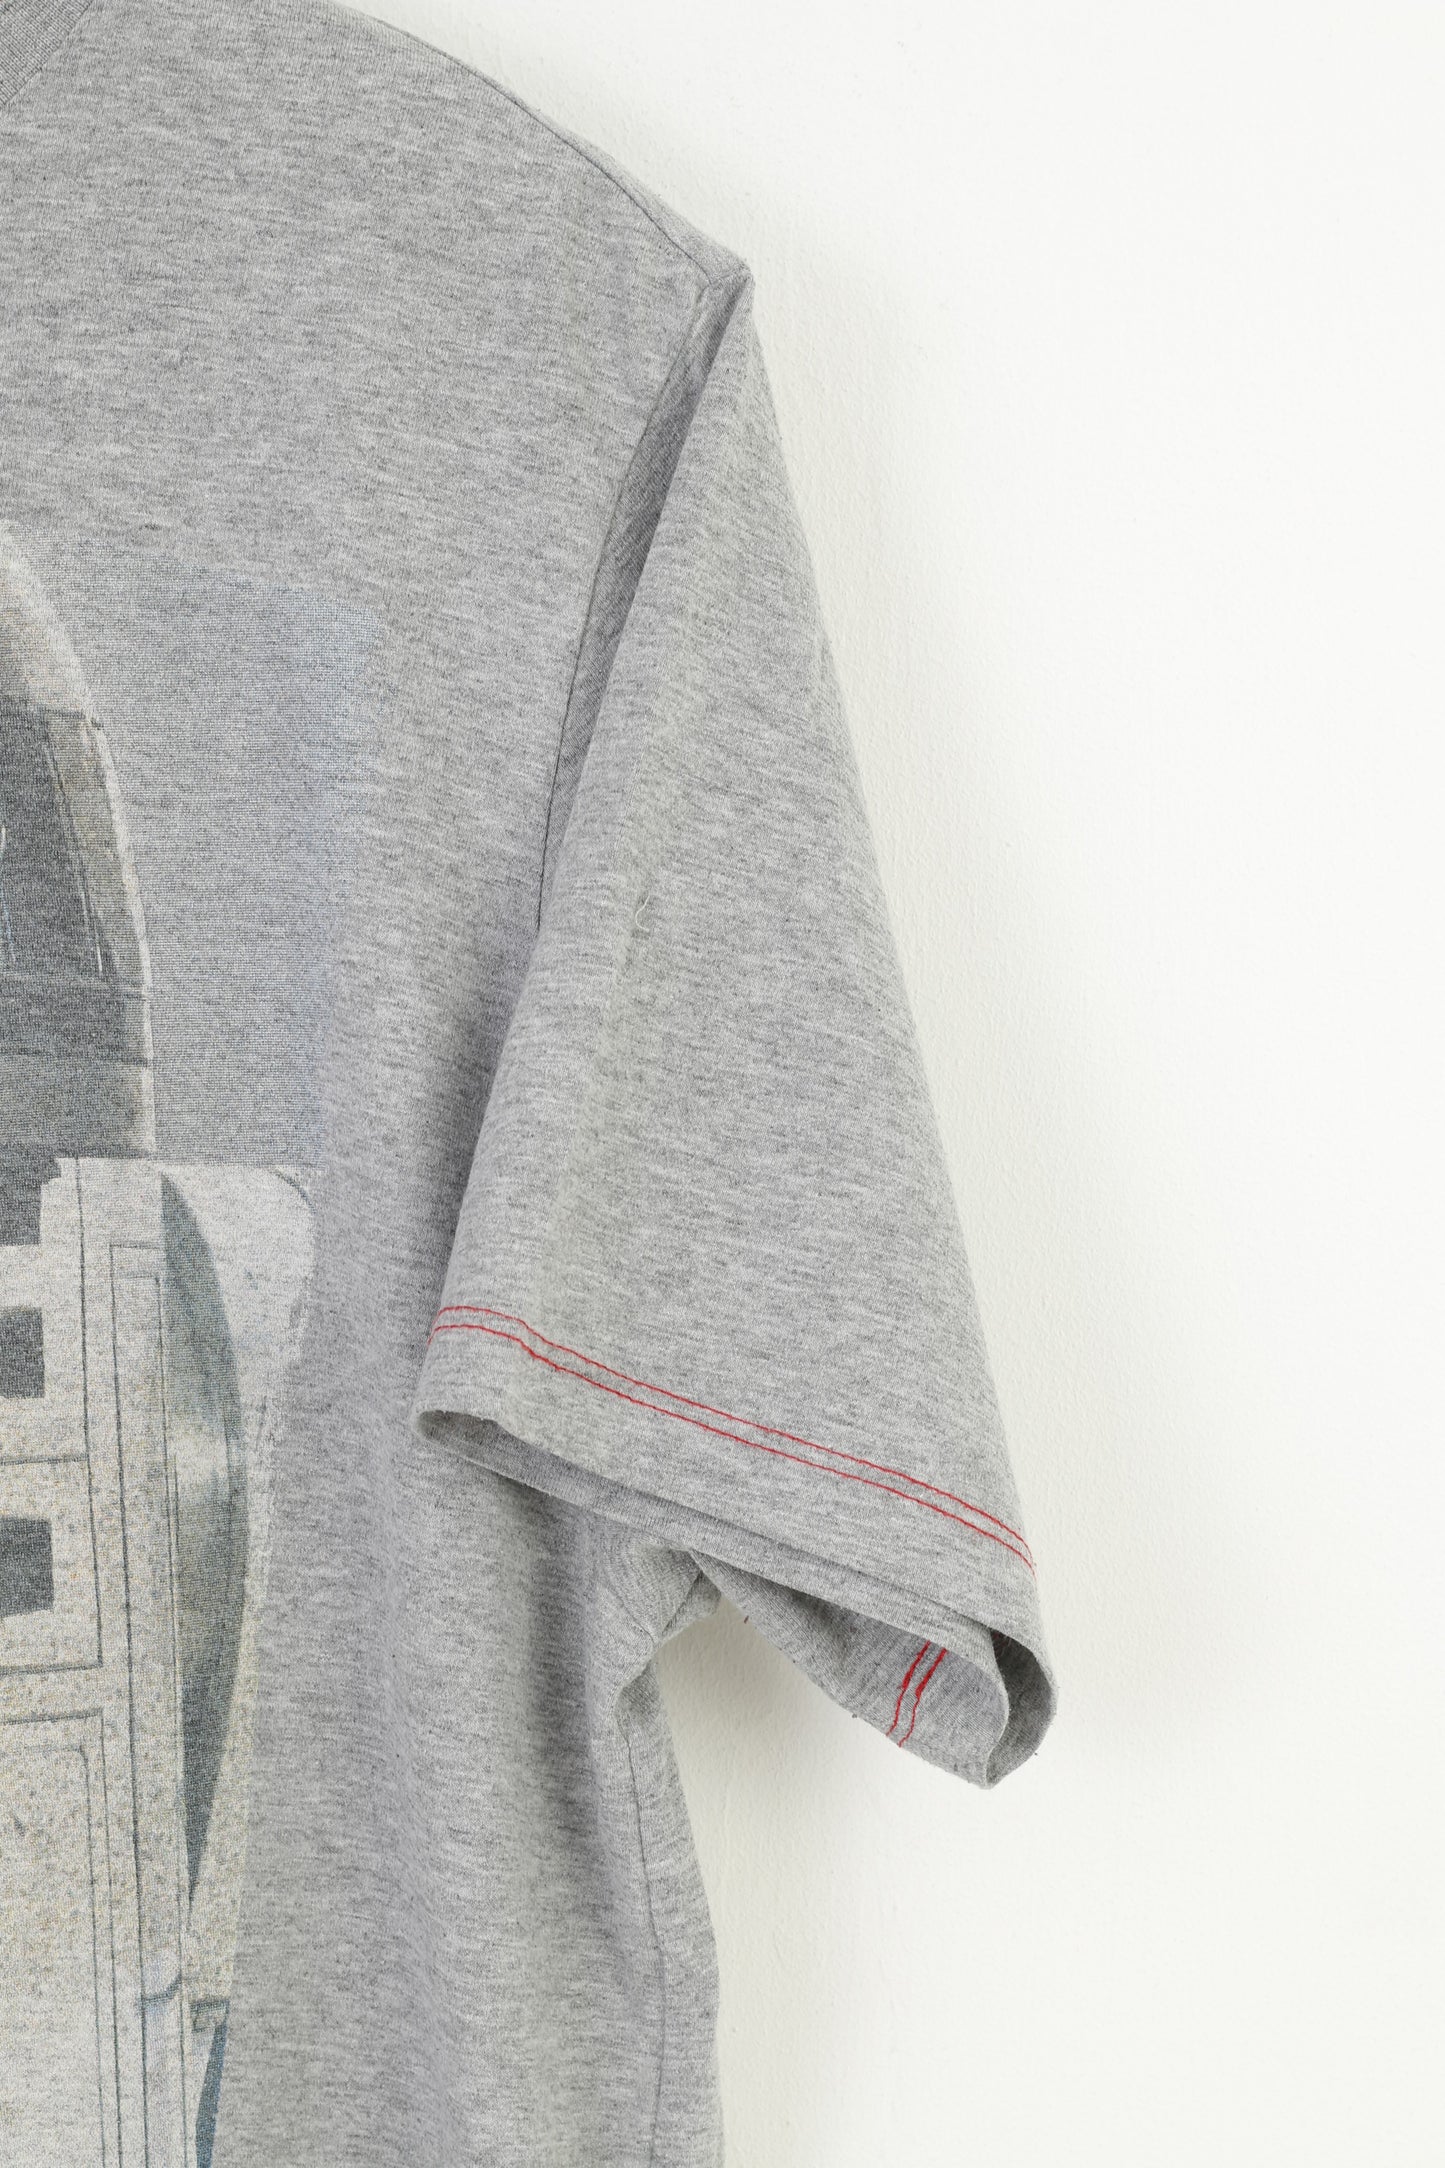 Star Wars Men L T-Shirt Grey  Graphic Crew Neck Short Sleeve Vintage Top